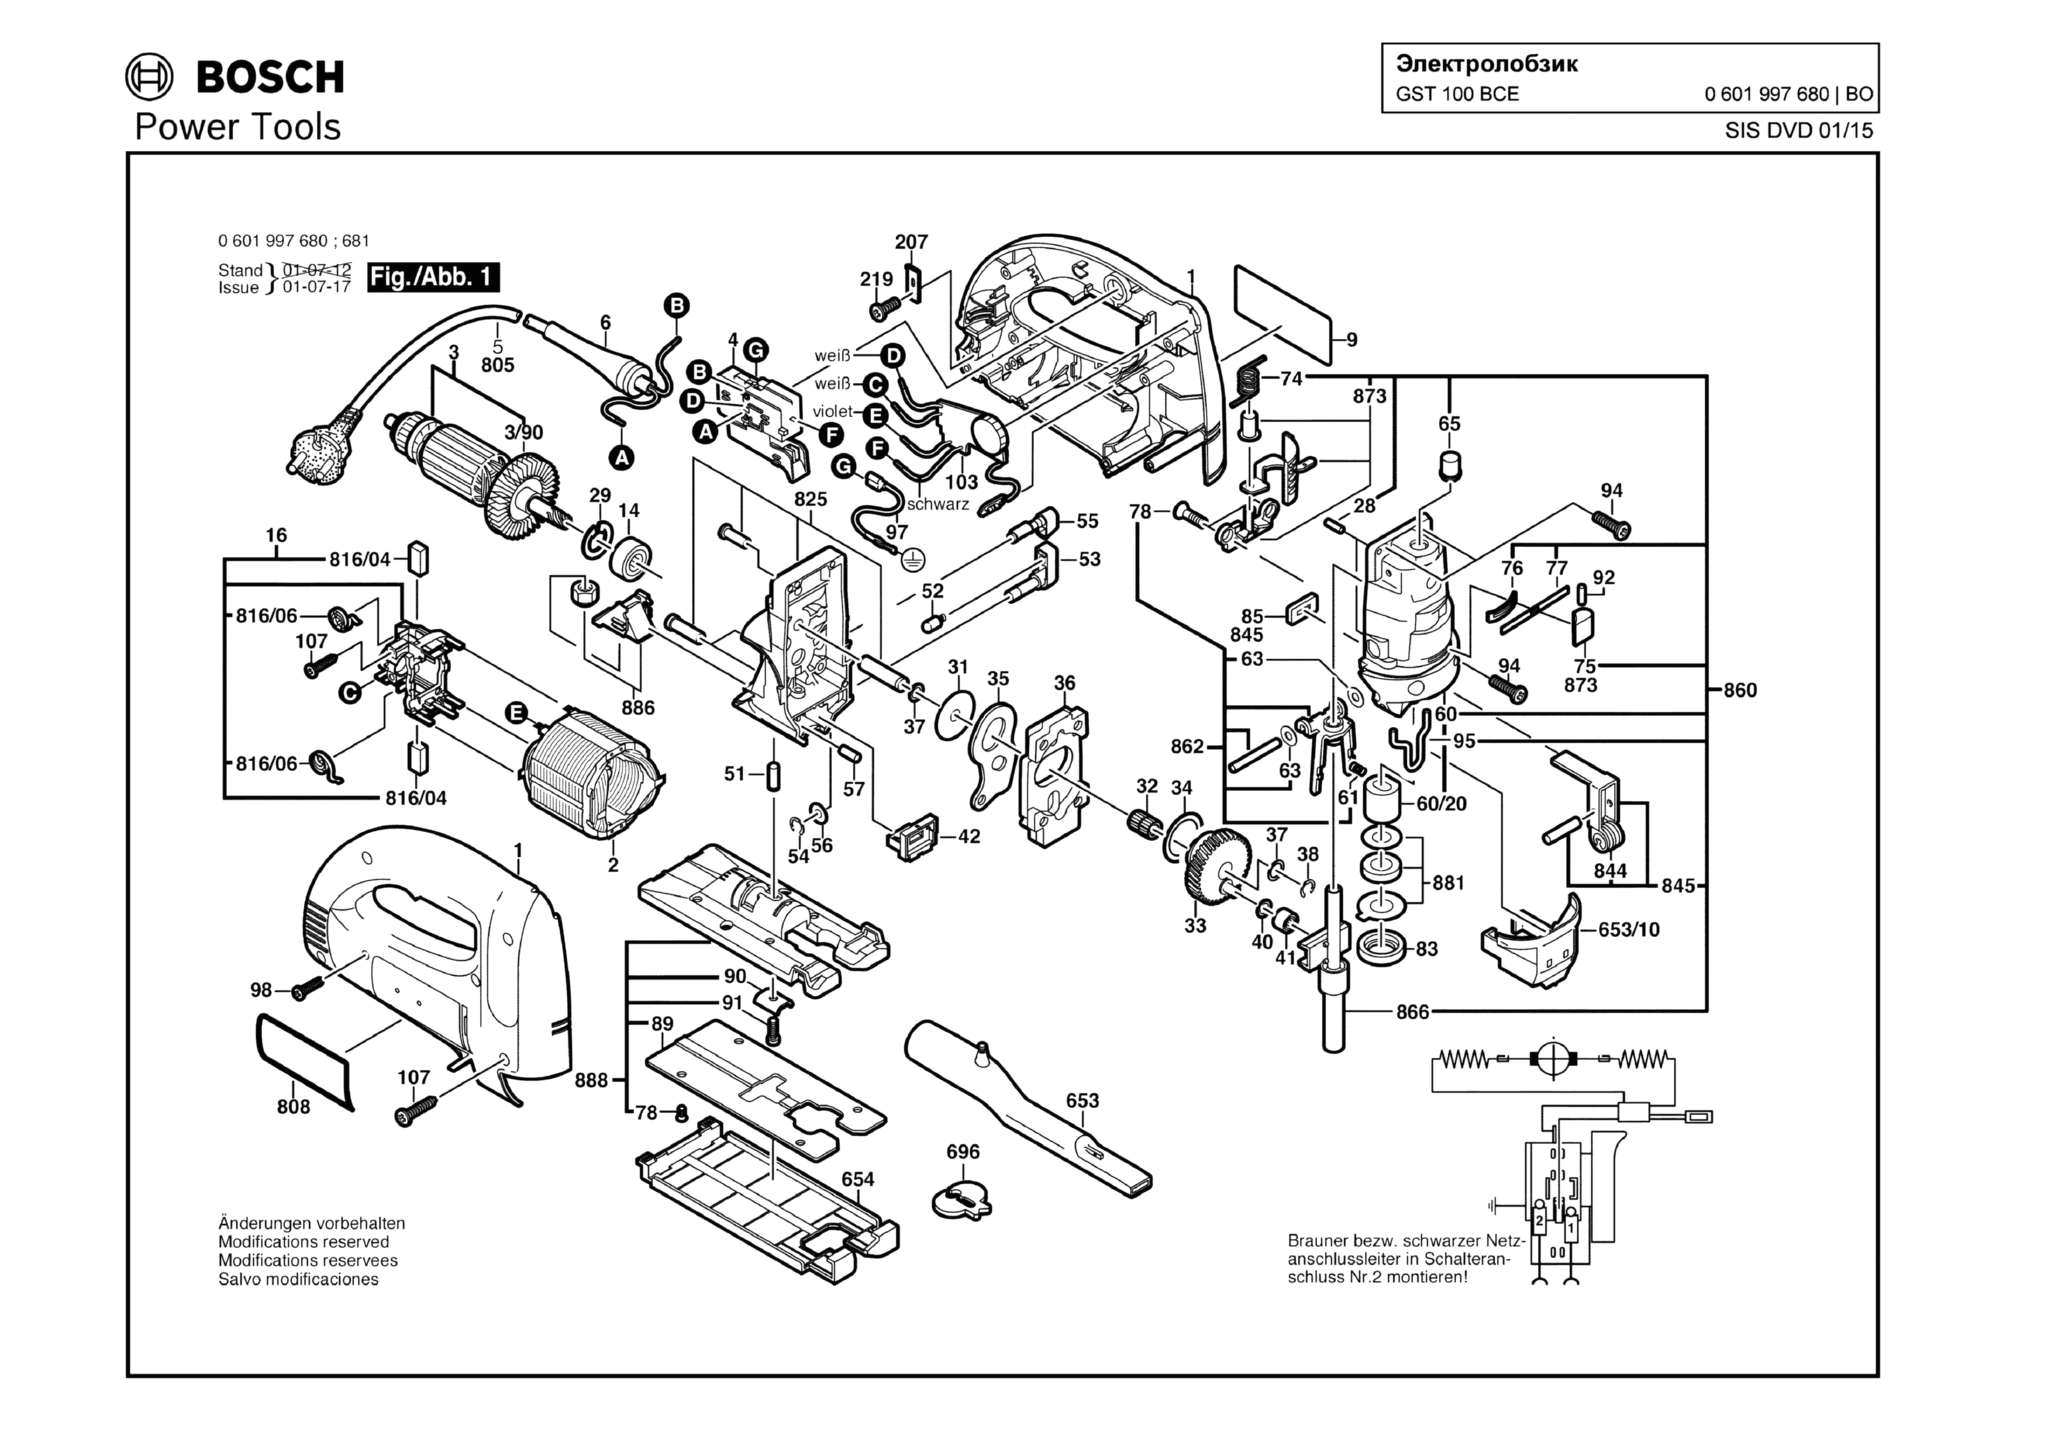 Запчасти, схема и деталировка Bosch GST 100 BCE (ТИП 0601997680)